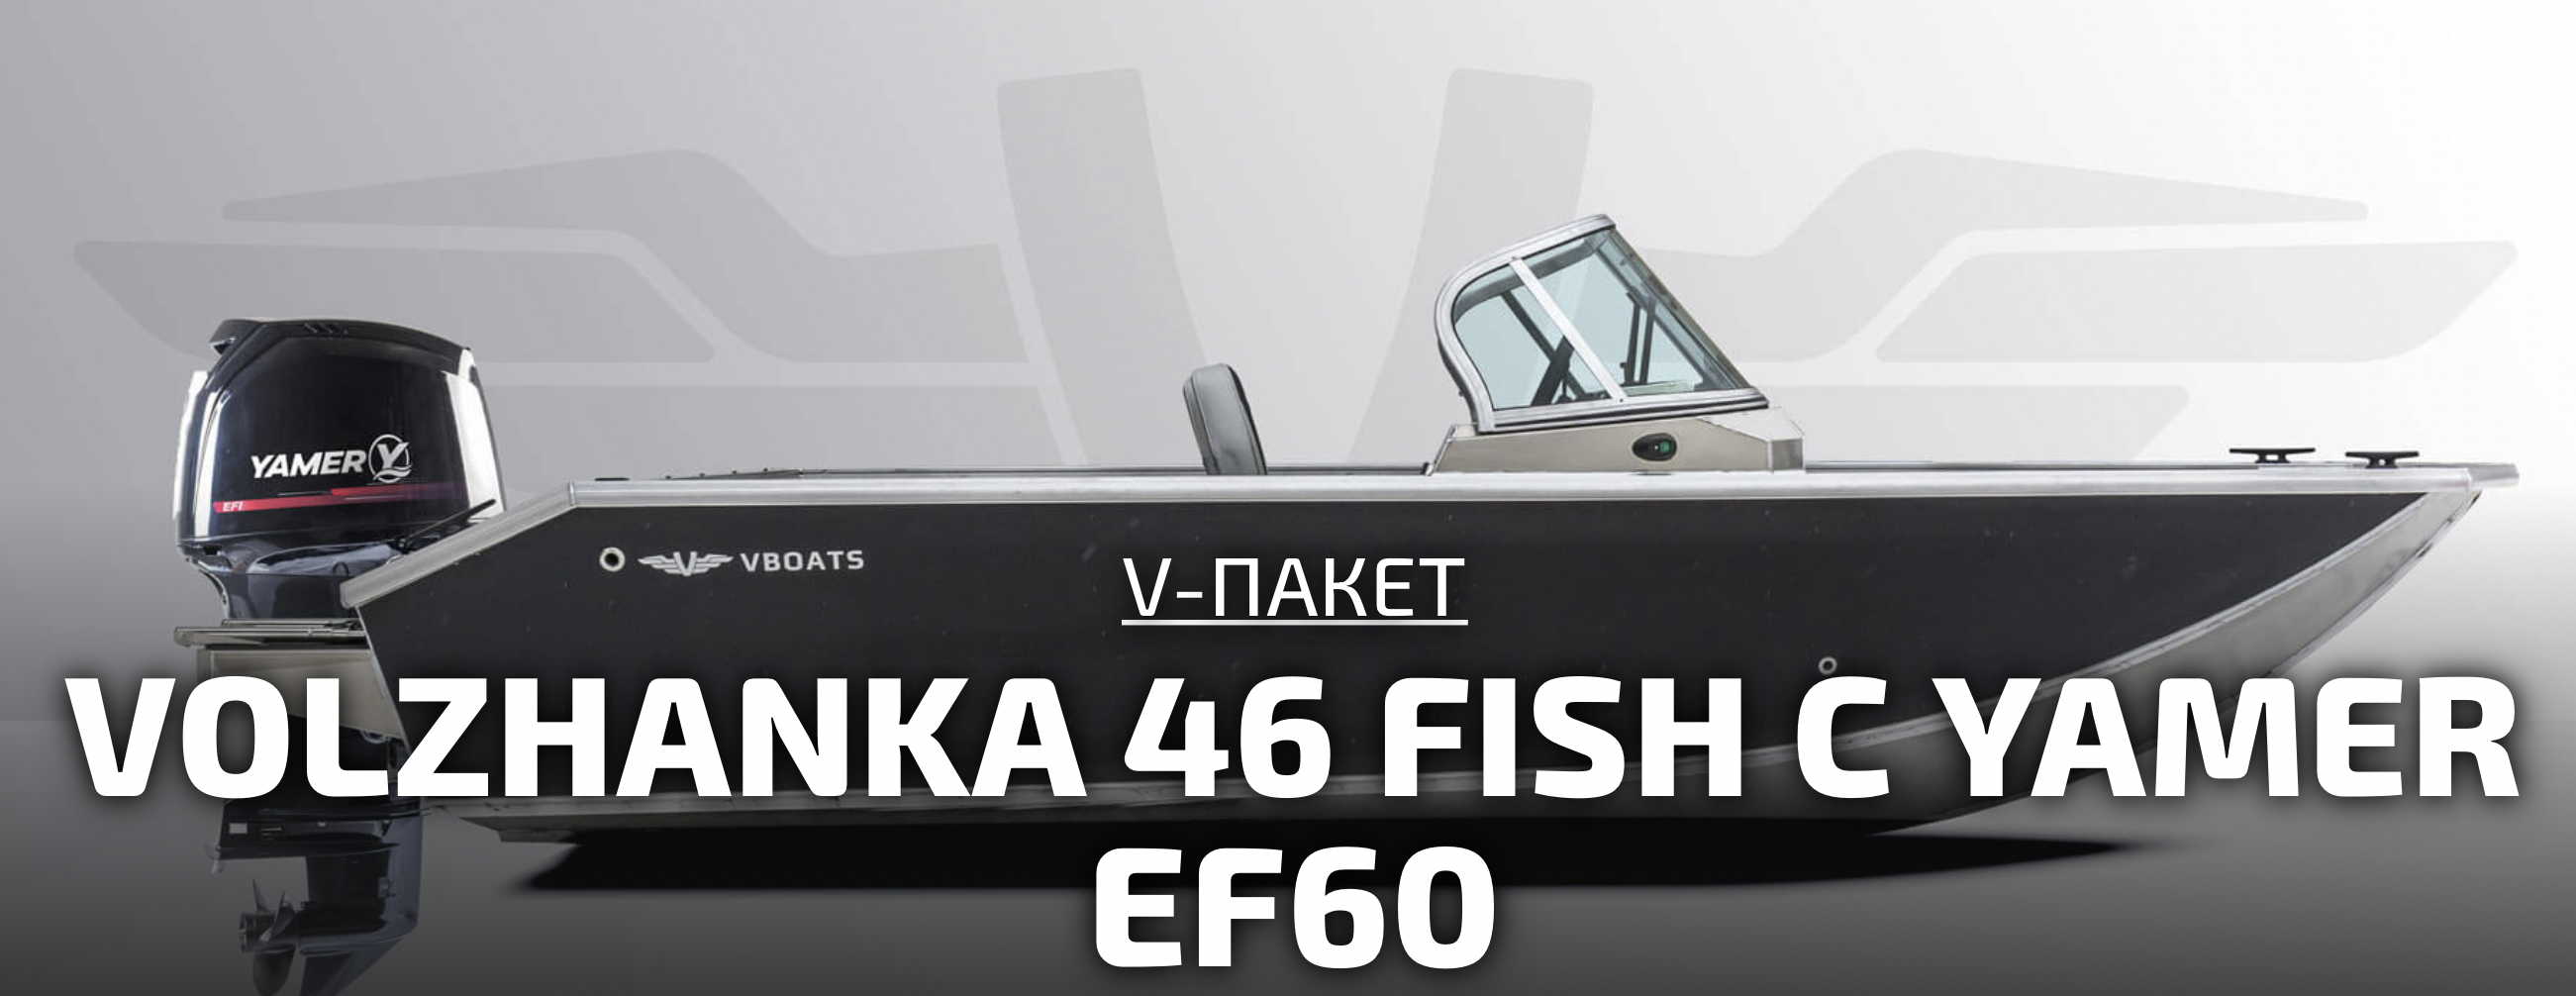 VOLZHANKA 46 FISH C YAMER EF60